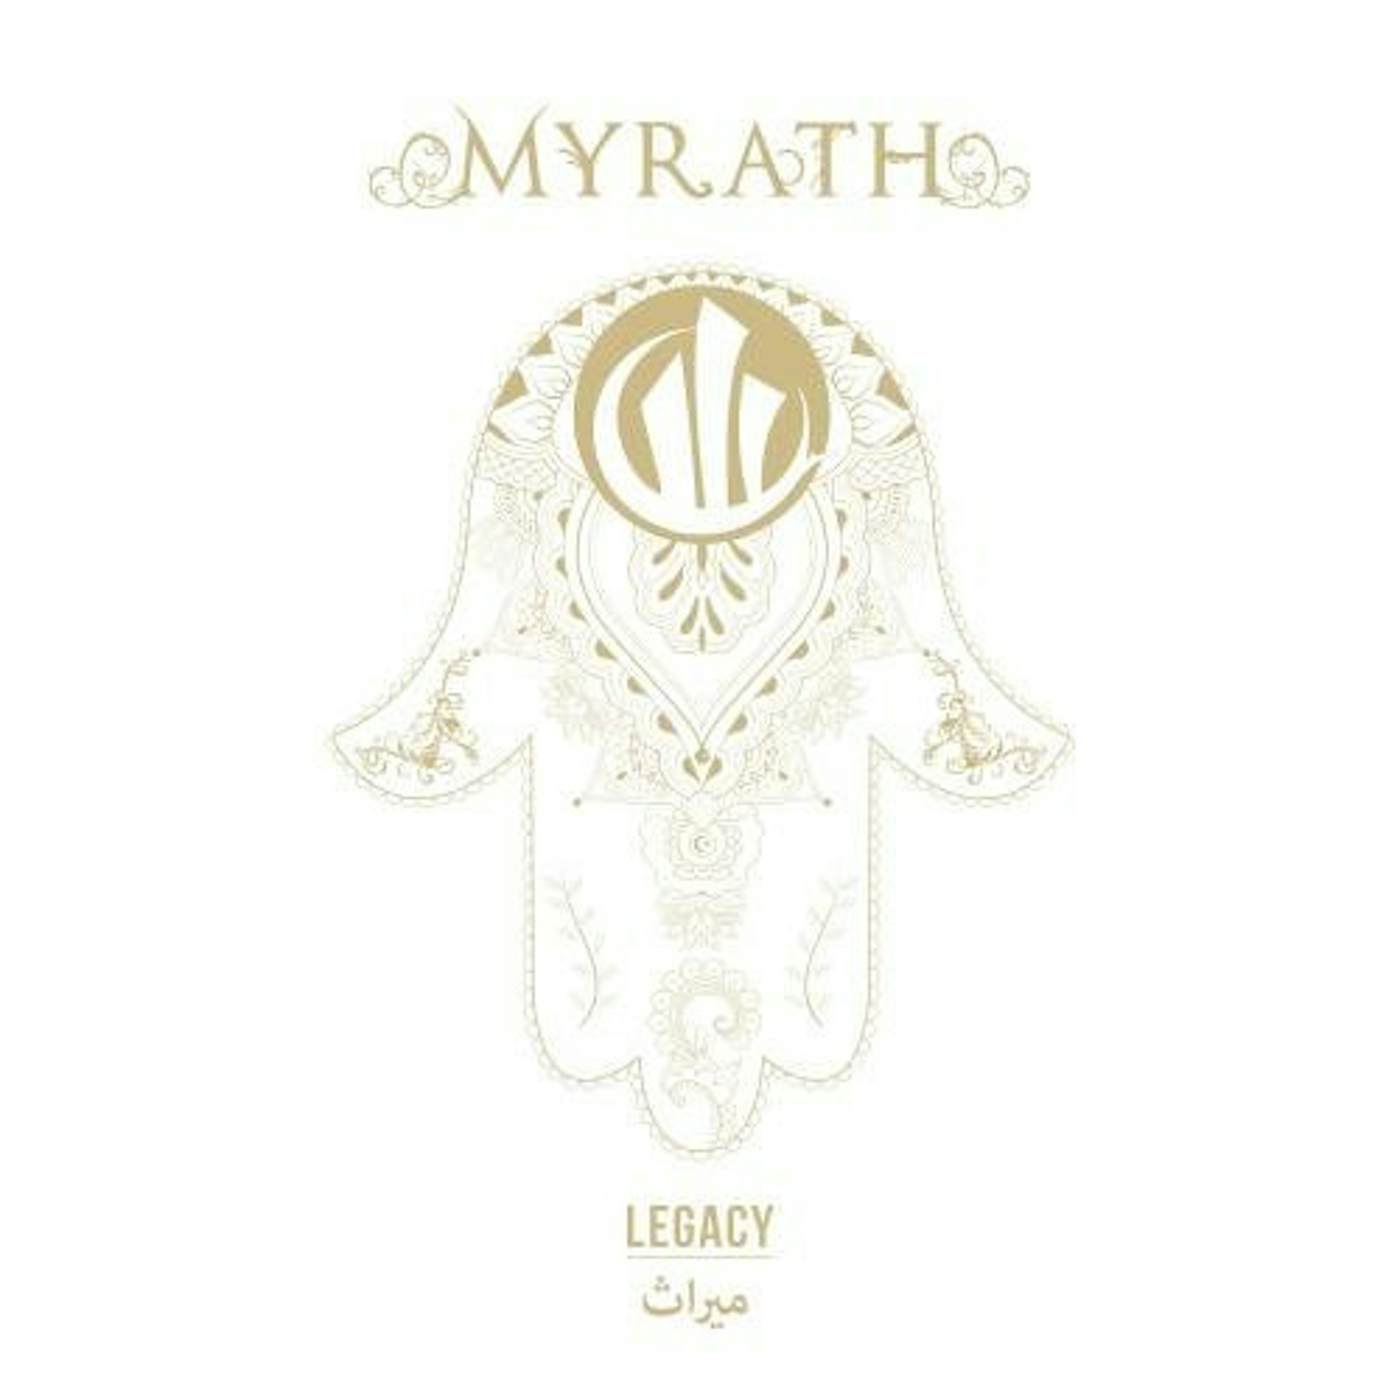 Myrath LEGACY CD